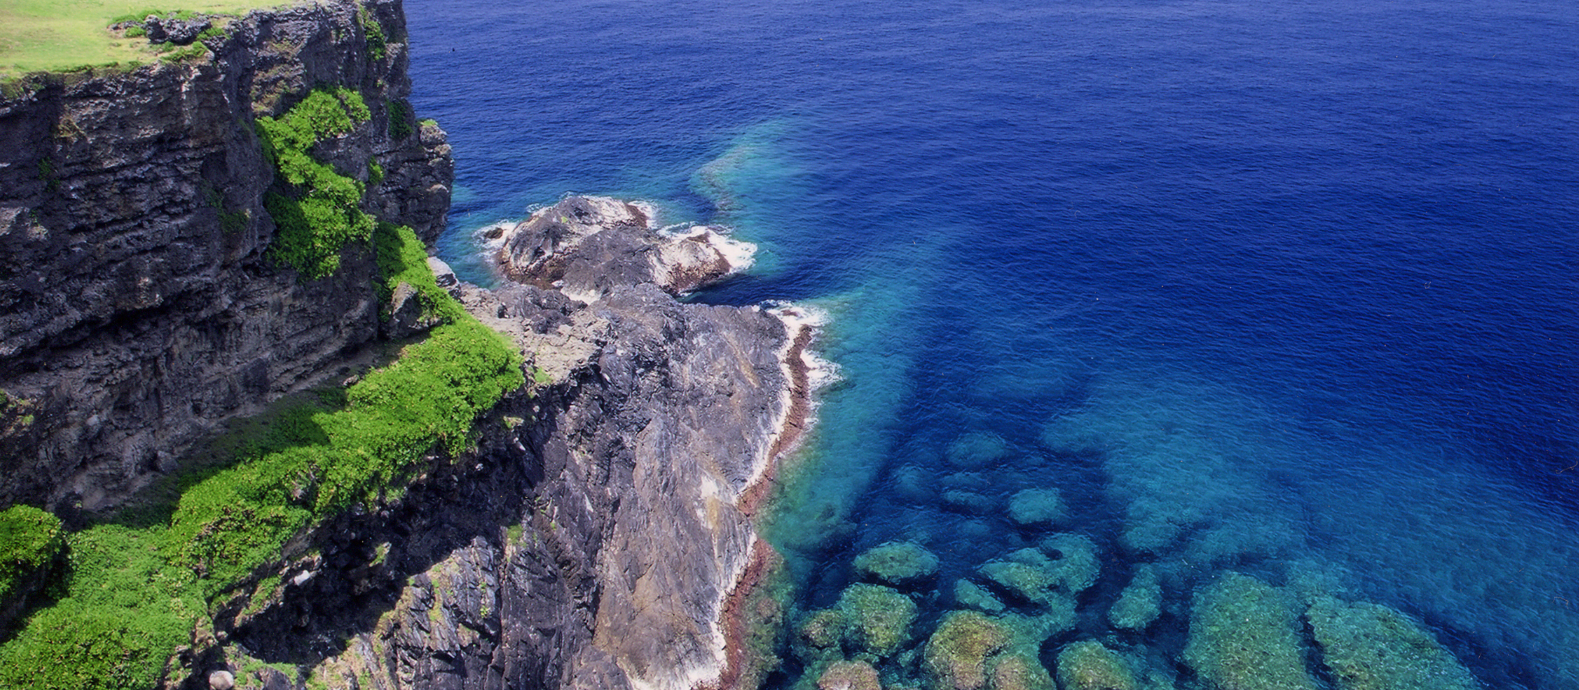 An island of flowers and limestone caverns: the Okinoerabujima Route-0